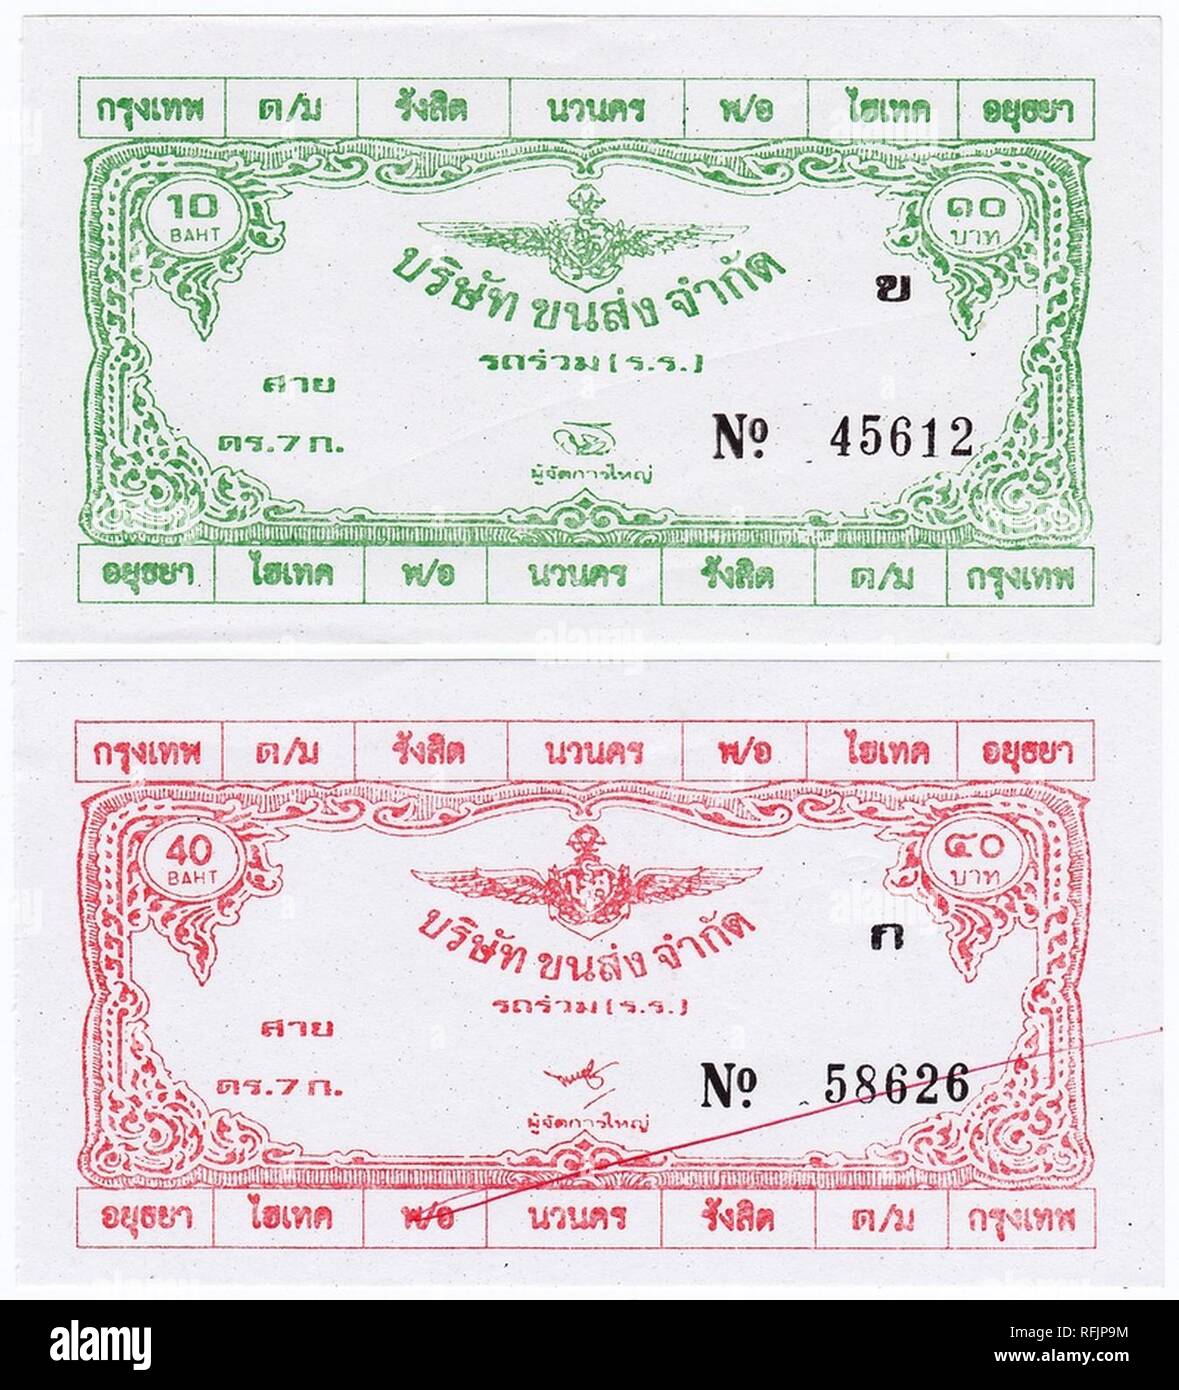 Ayutthaya - Bangkok bus tickets. Stock Photo